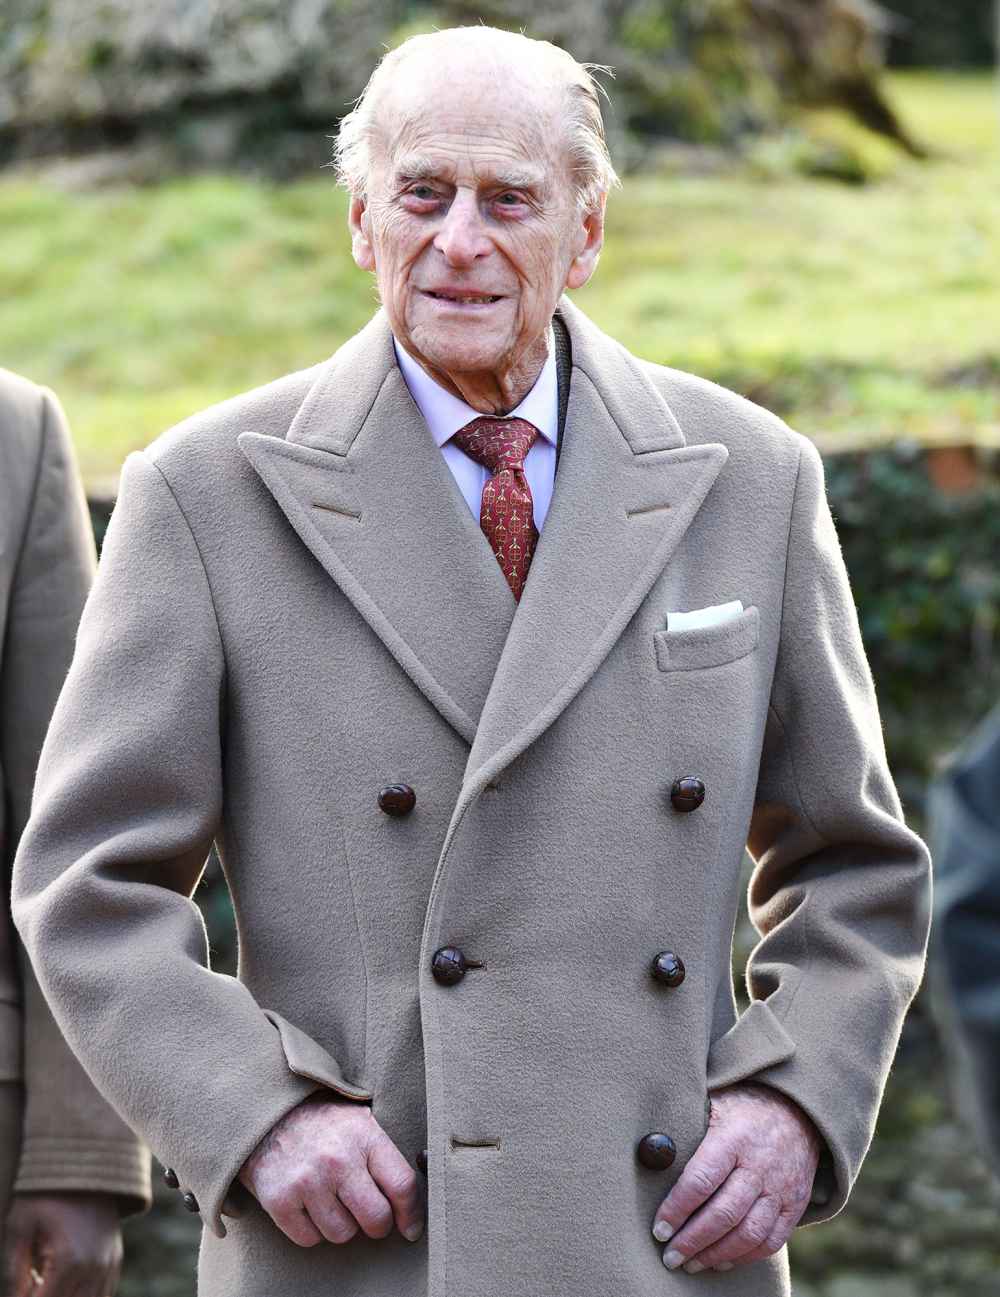 Prince Philip Undergoes Successful Heart Surgery Amid Royal Drama